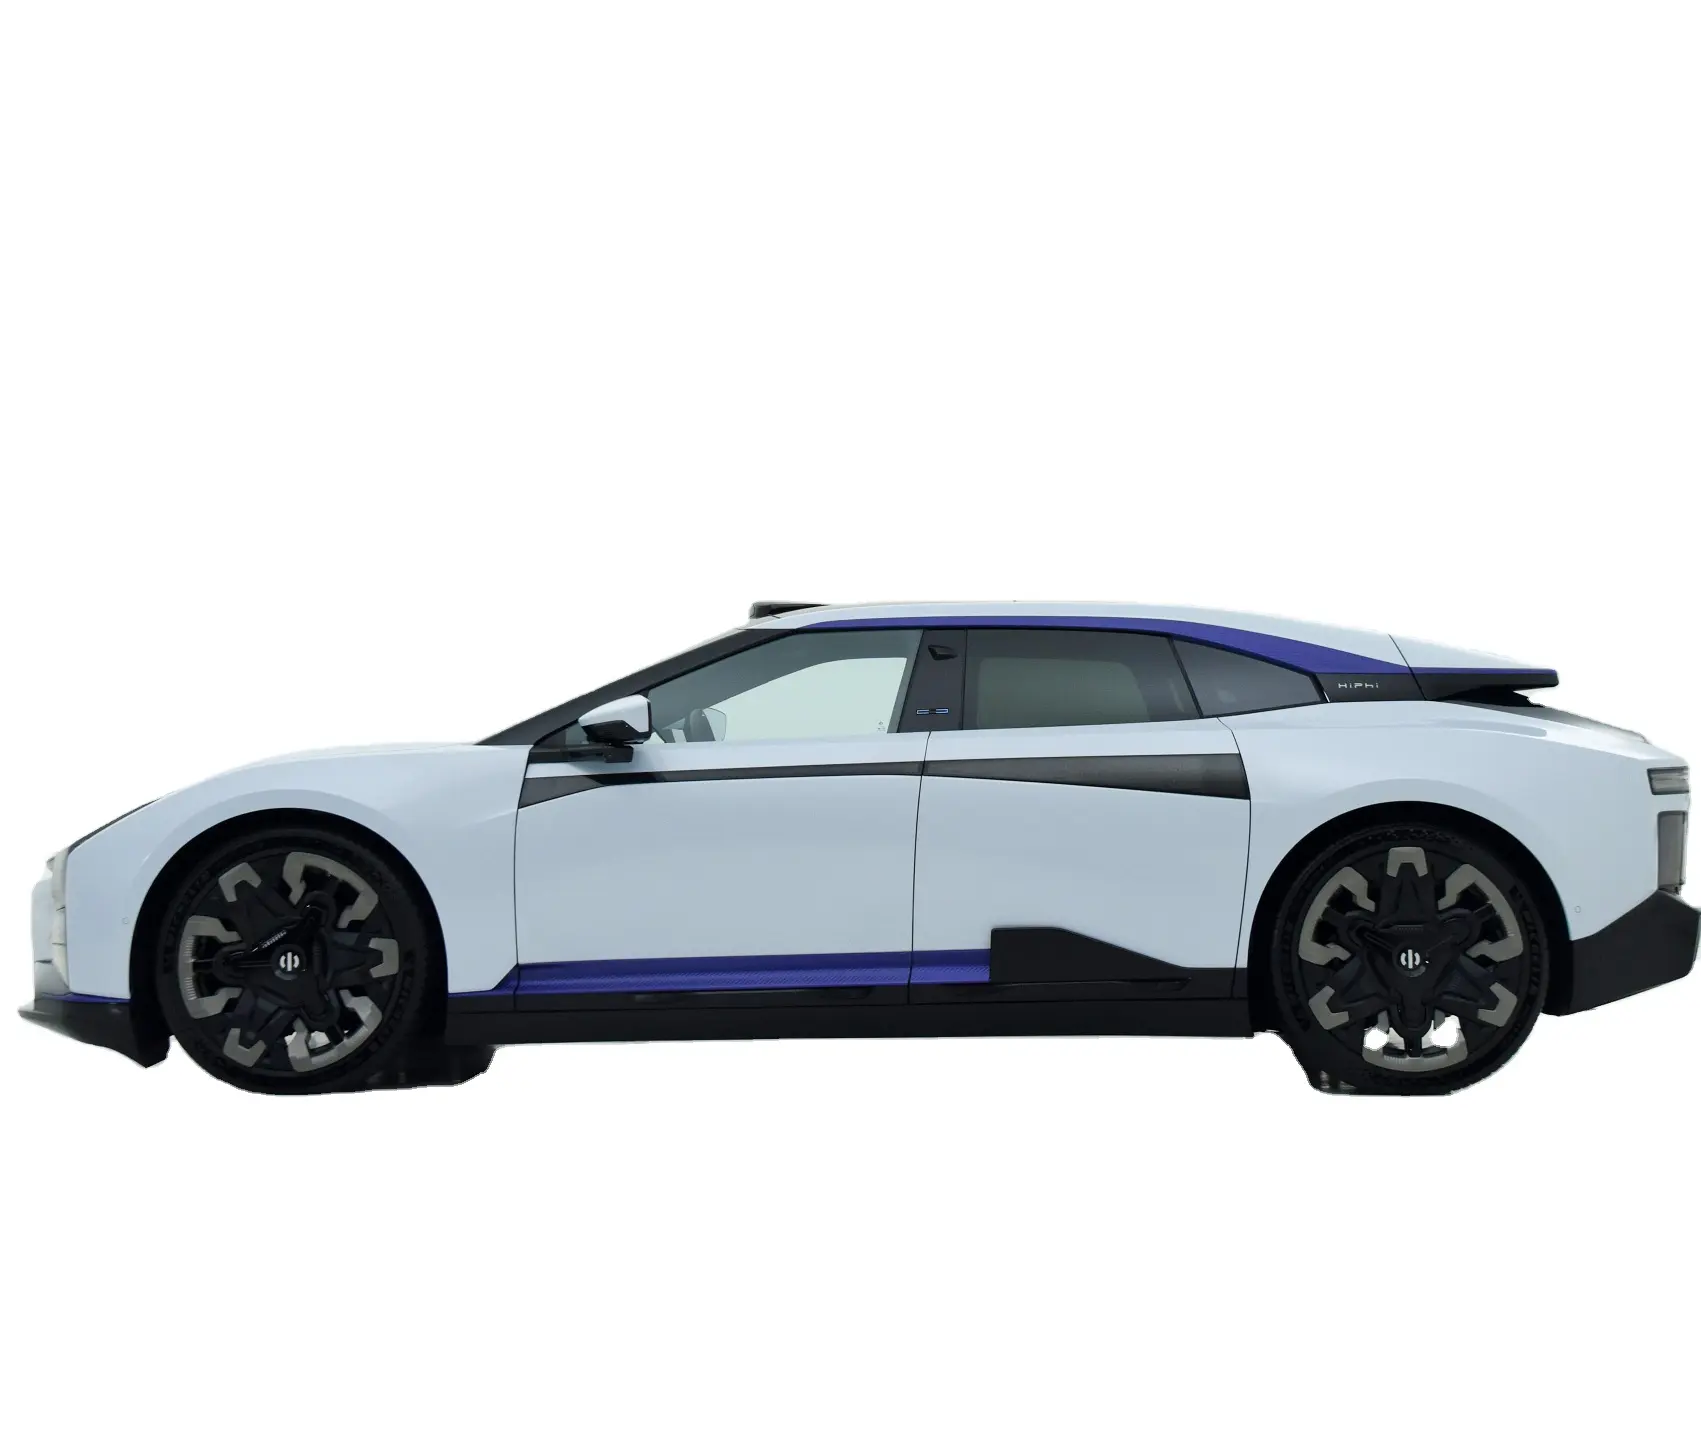 2023 Evカー705kmエンデュランスハイファイZ4人掛けデュアルモーター最高速度200km/h 4wd純粋な電気自動車ハイファイX電気自動車新しいセダン